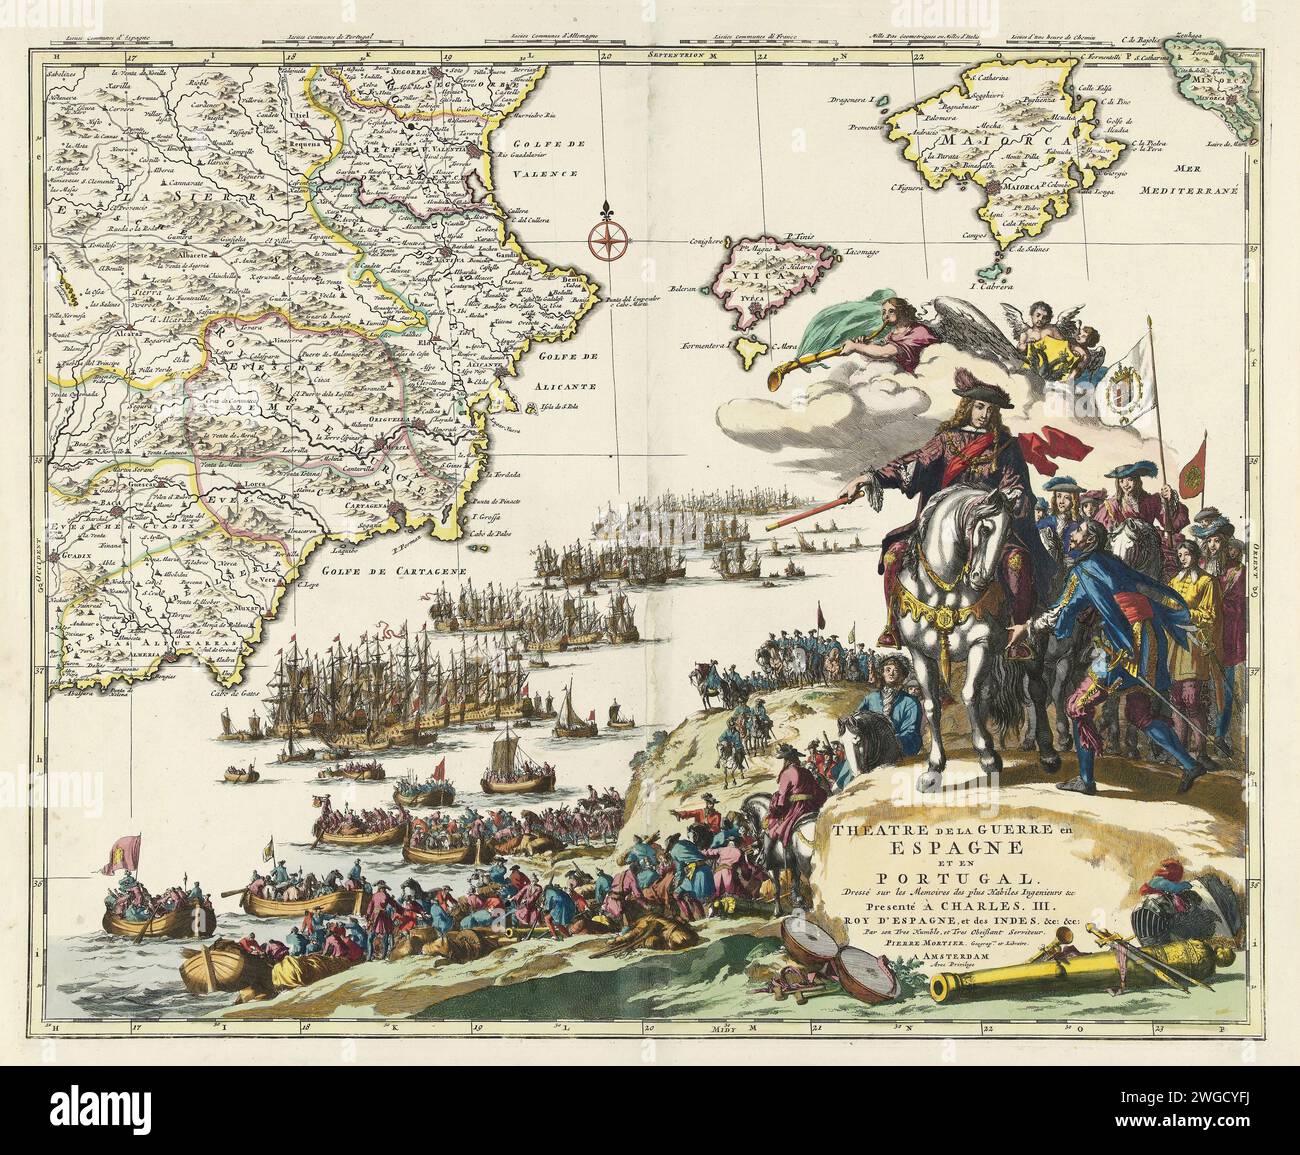 Vintage Map "Theatre de la Guerre en Espagne et en Portugal", illustrating the fields of battles in Spain and Portugal.  print maker Jan Luyken, 1703 Stock Photo